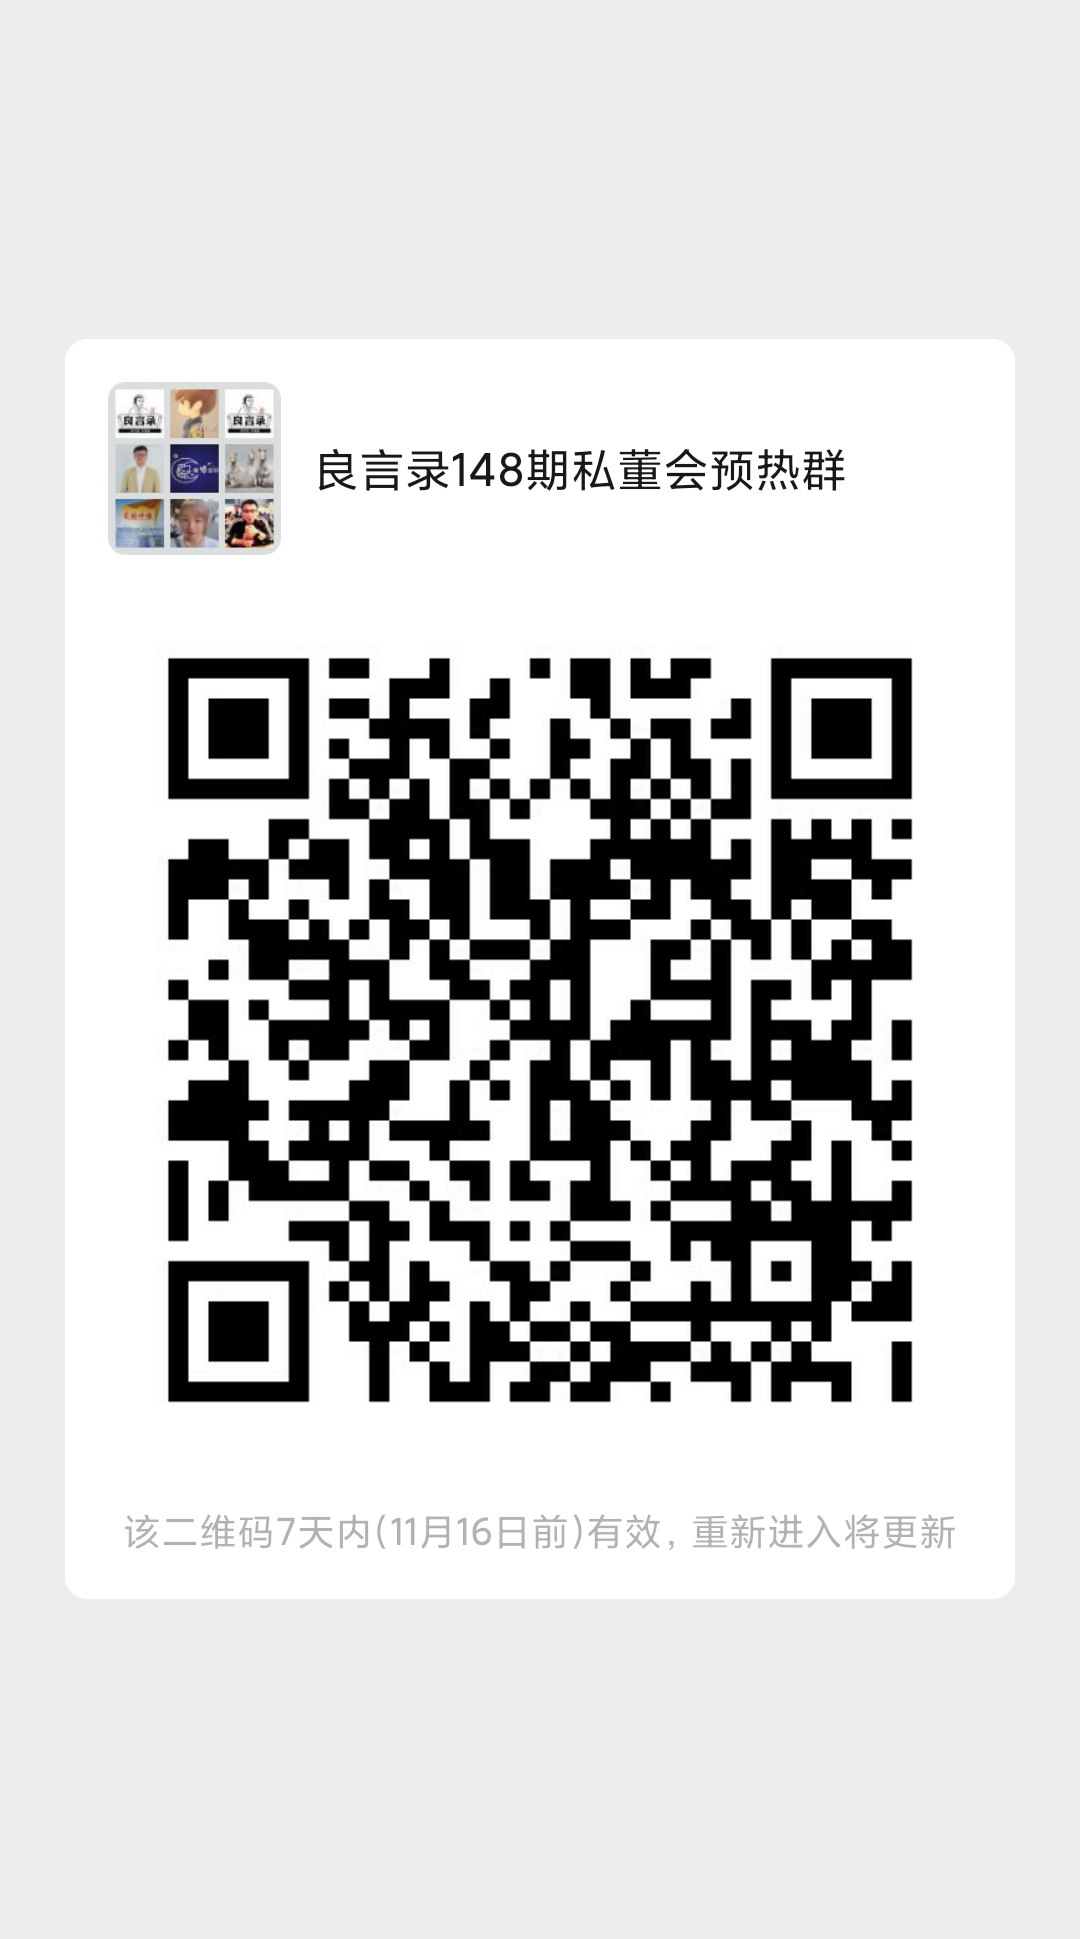 http://www.huodongxing.com/file/20151119/5622148470499/253599458683952.png